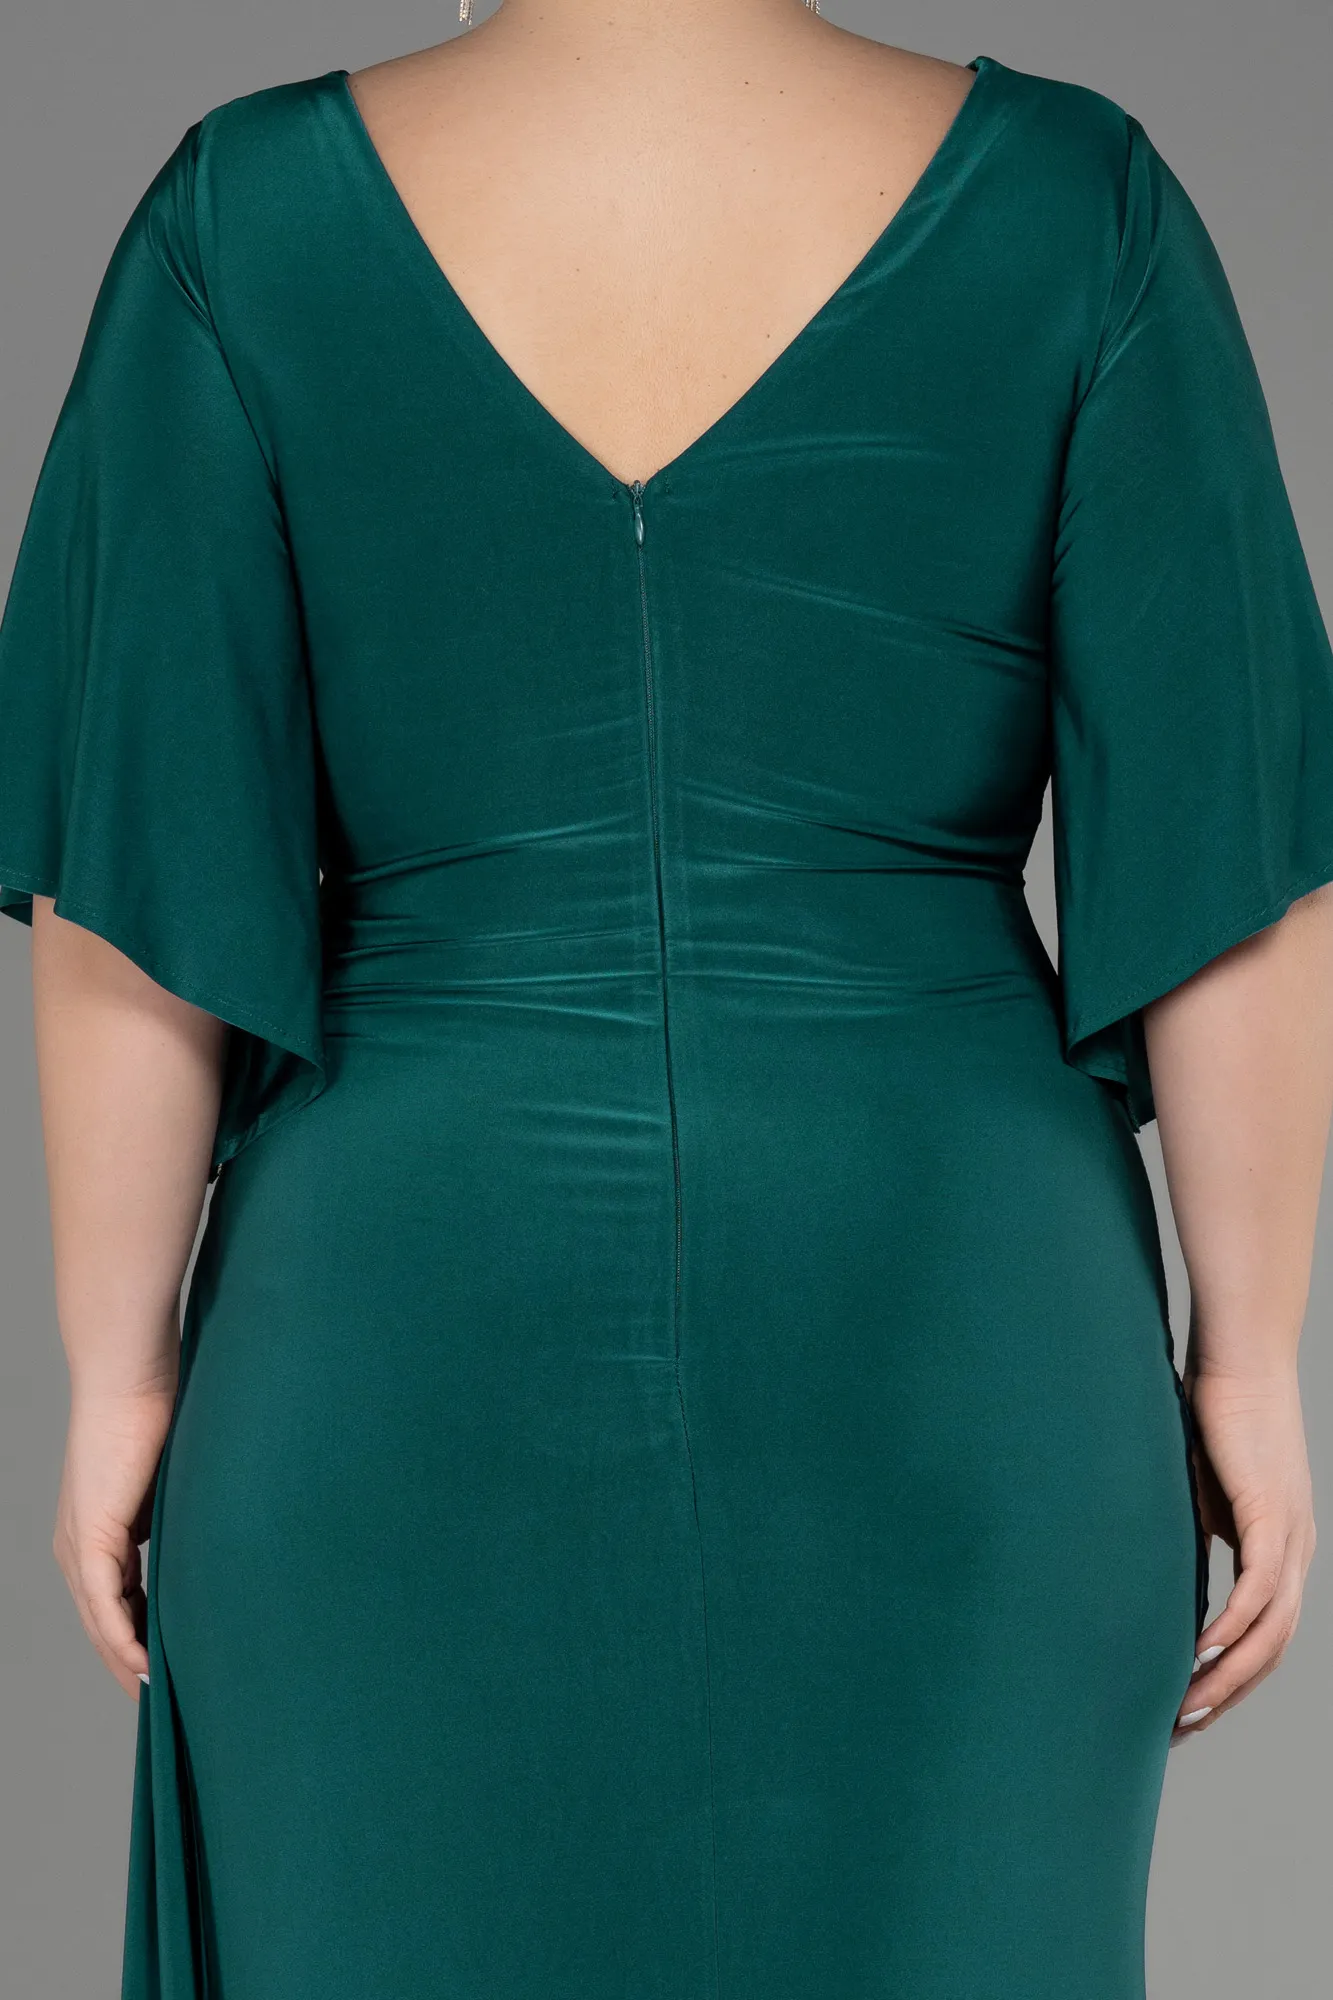 Emerald Green-Long Plus Size Engagement Dress ABU3736